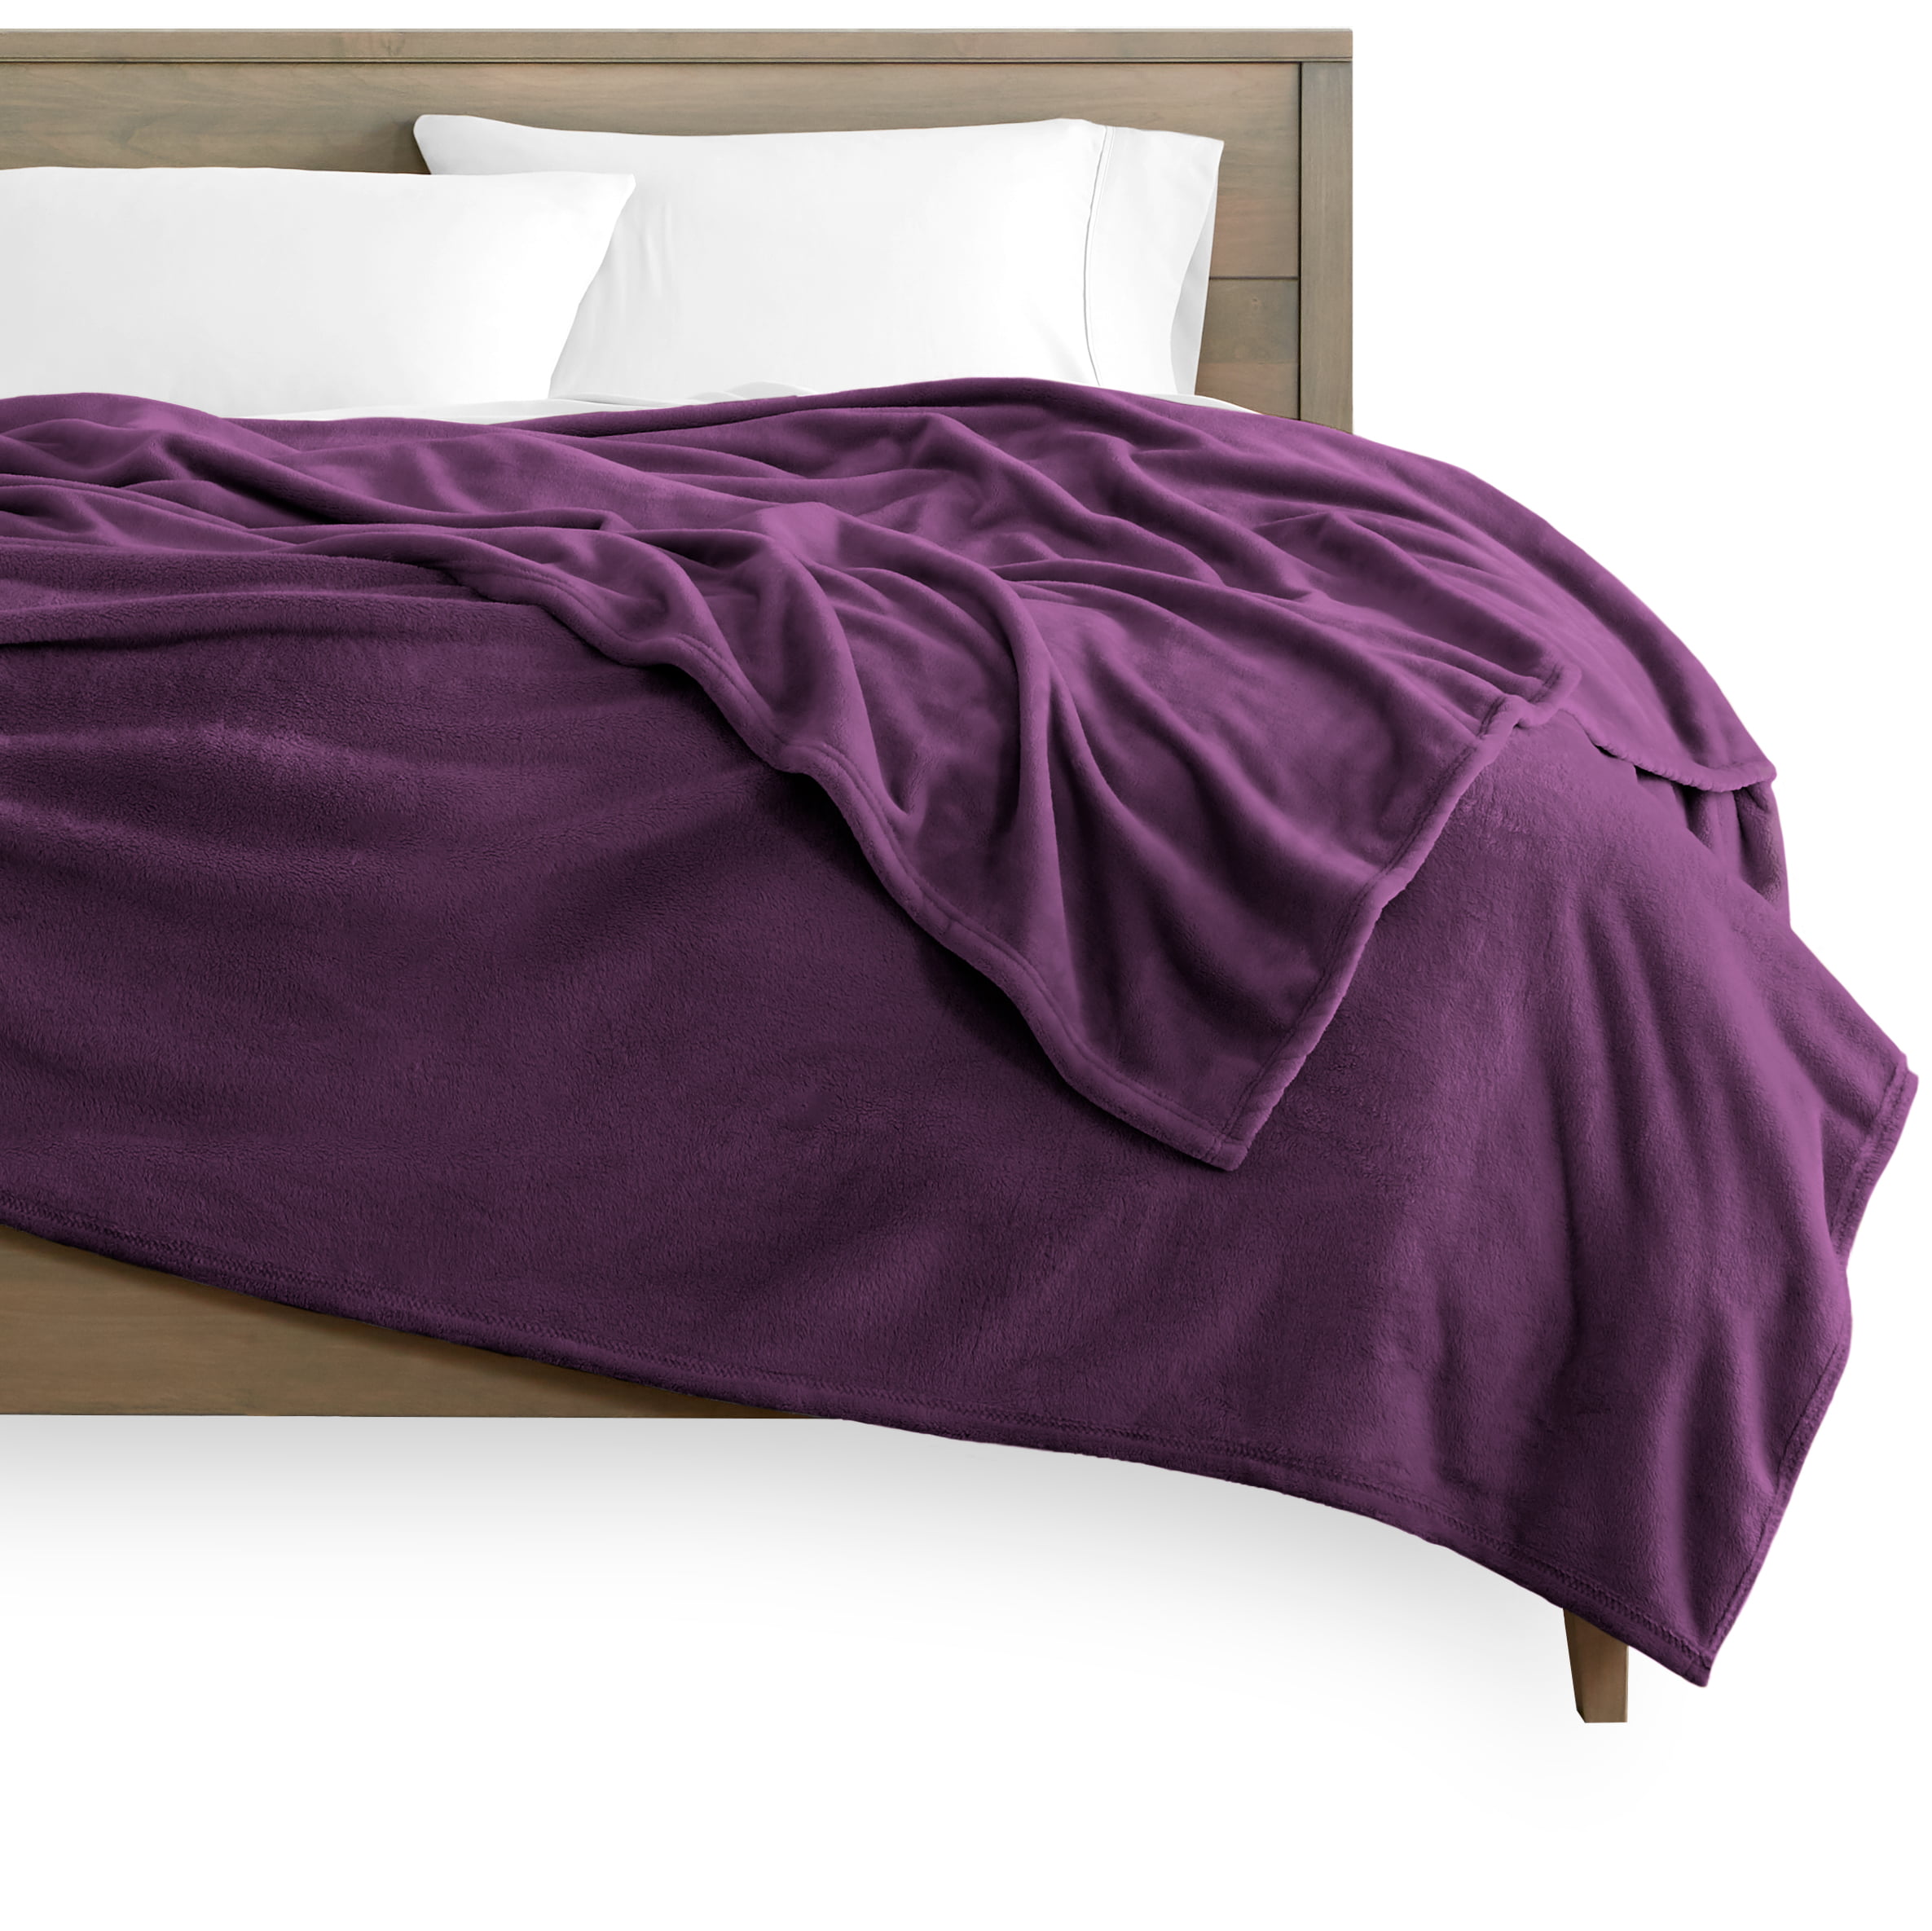 Bare Home Ultra Soft Microplush Fleece Blanket (Full/Queen, Plum)